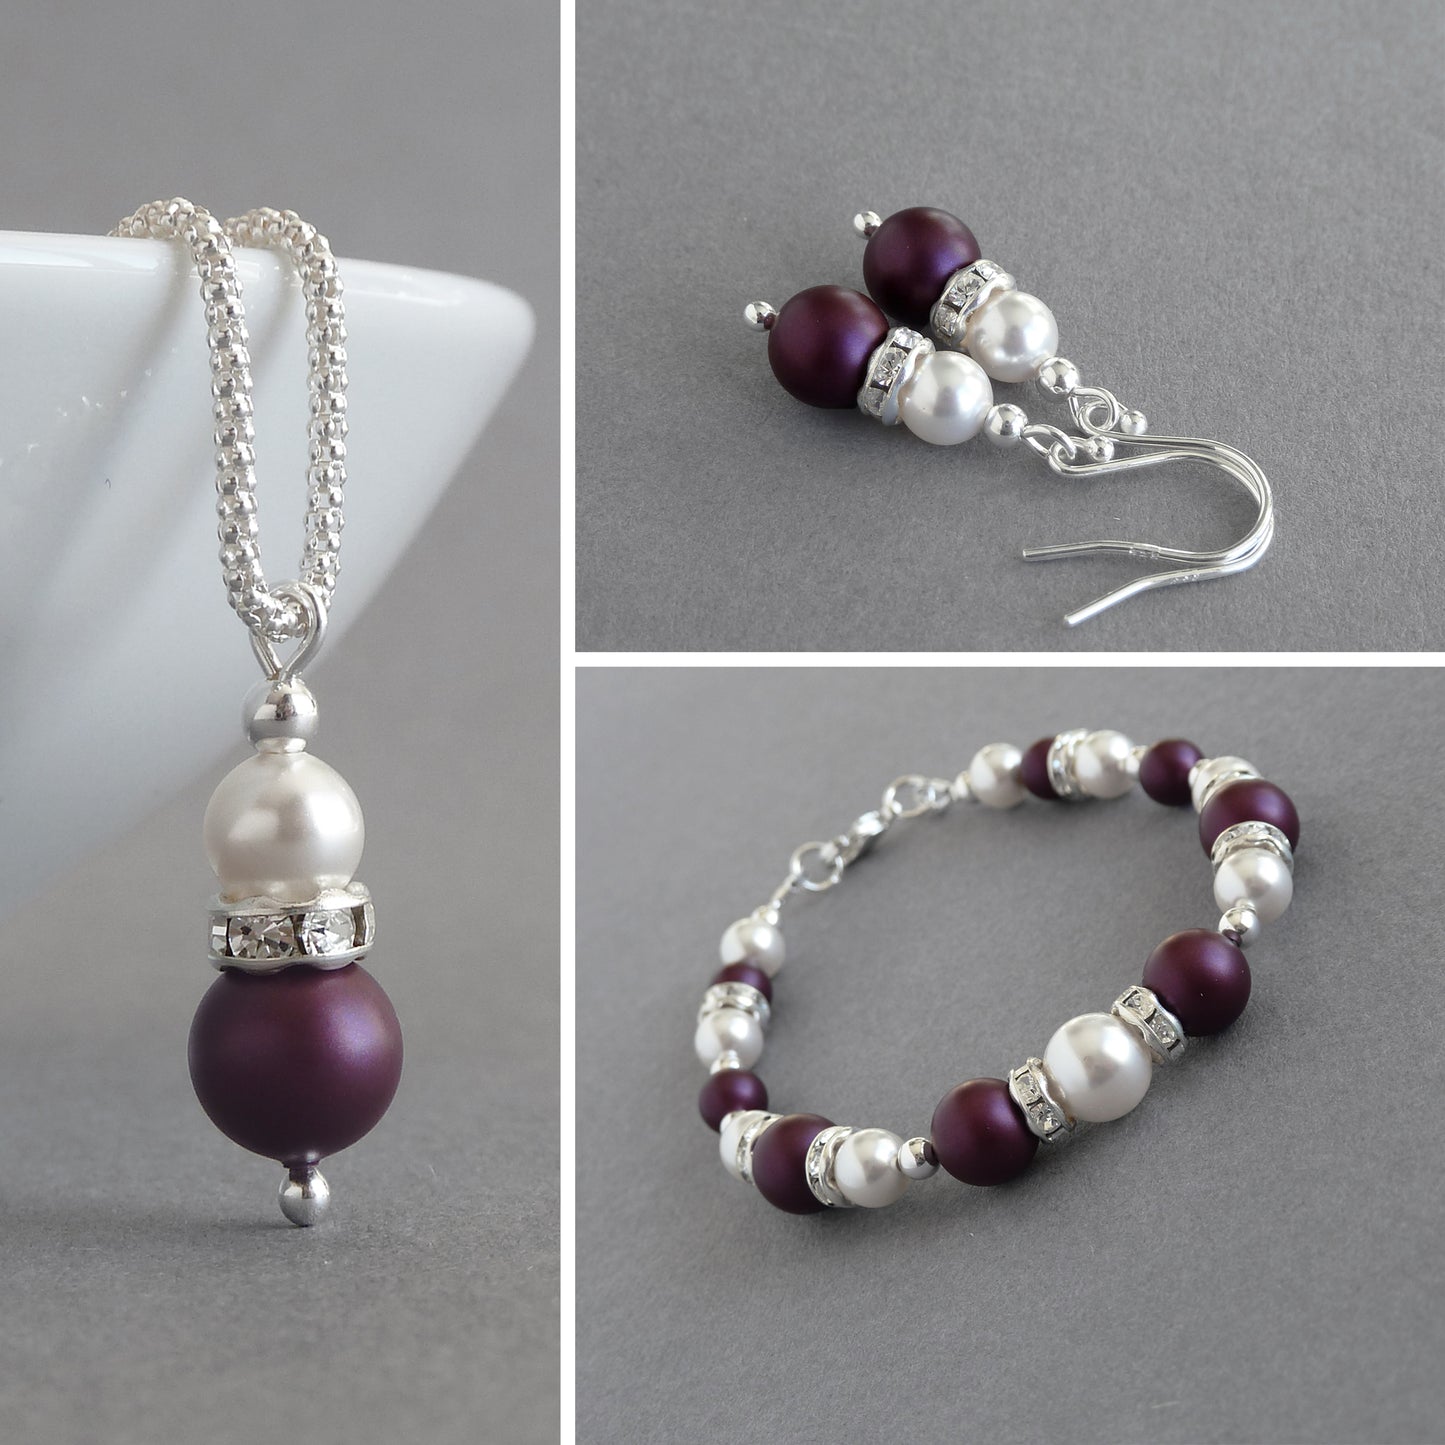 Plum jewellery set from Anna King Jewellery